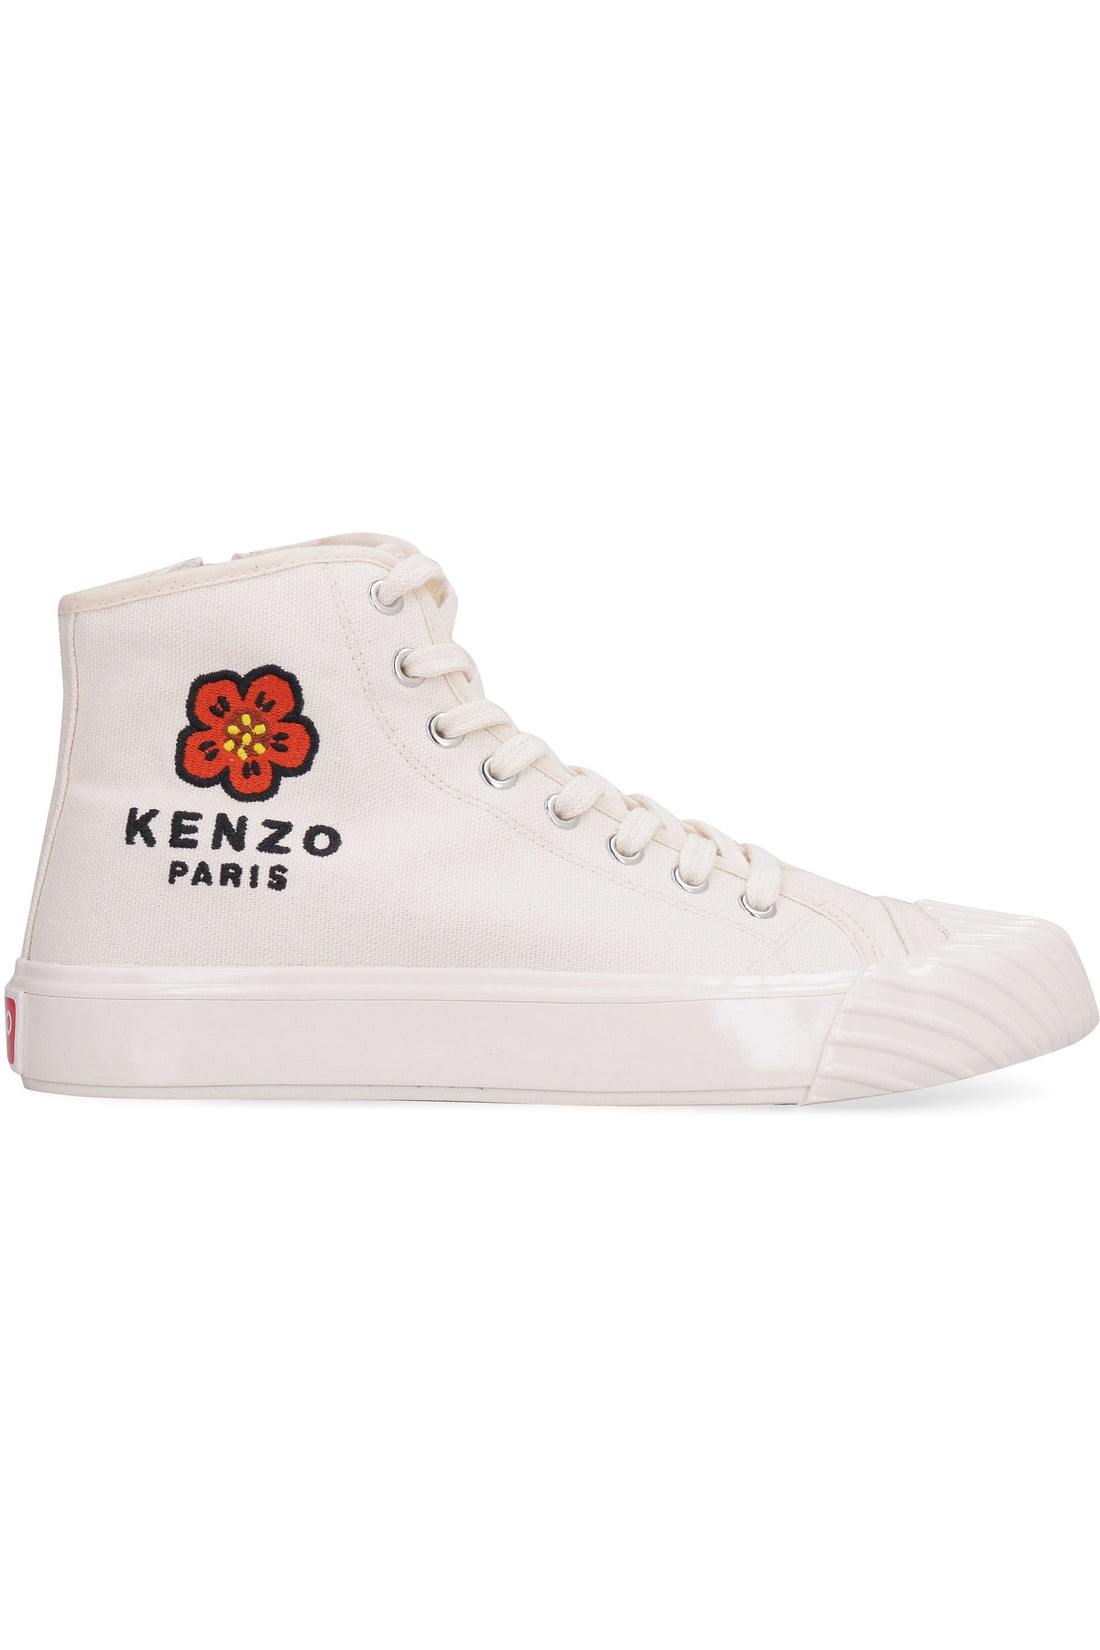 Kenzo-OUTLET-SALE-Kenzoschool high-top sneakers-ARCHIVIST